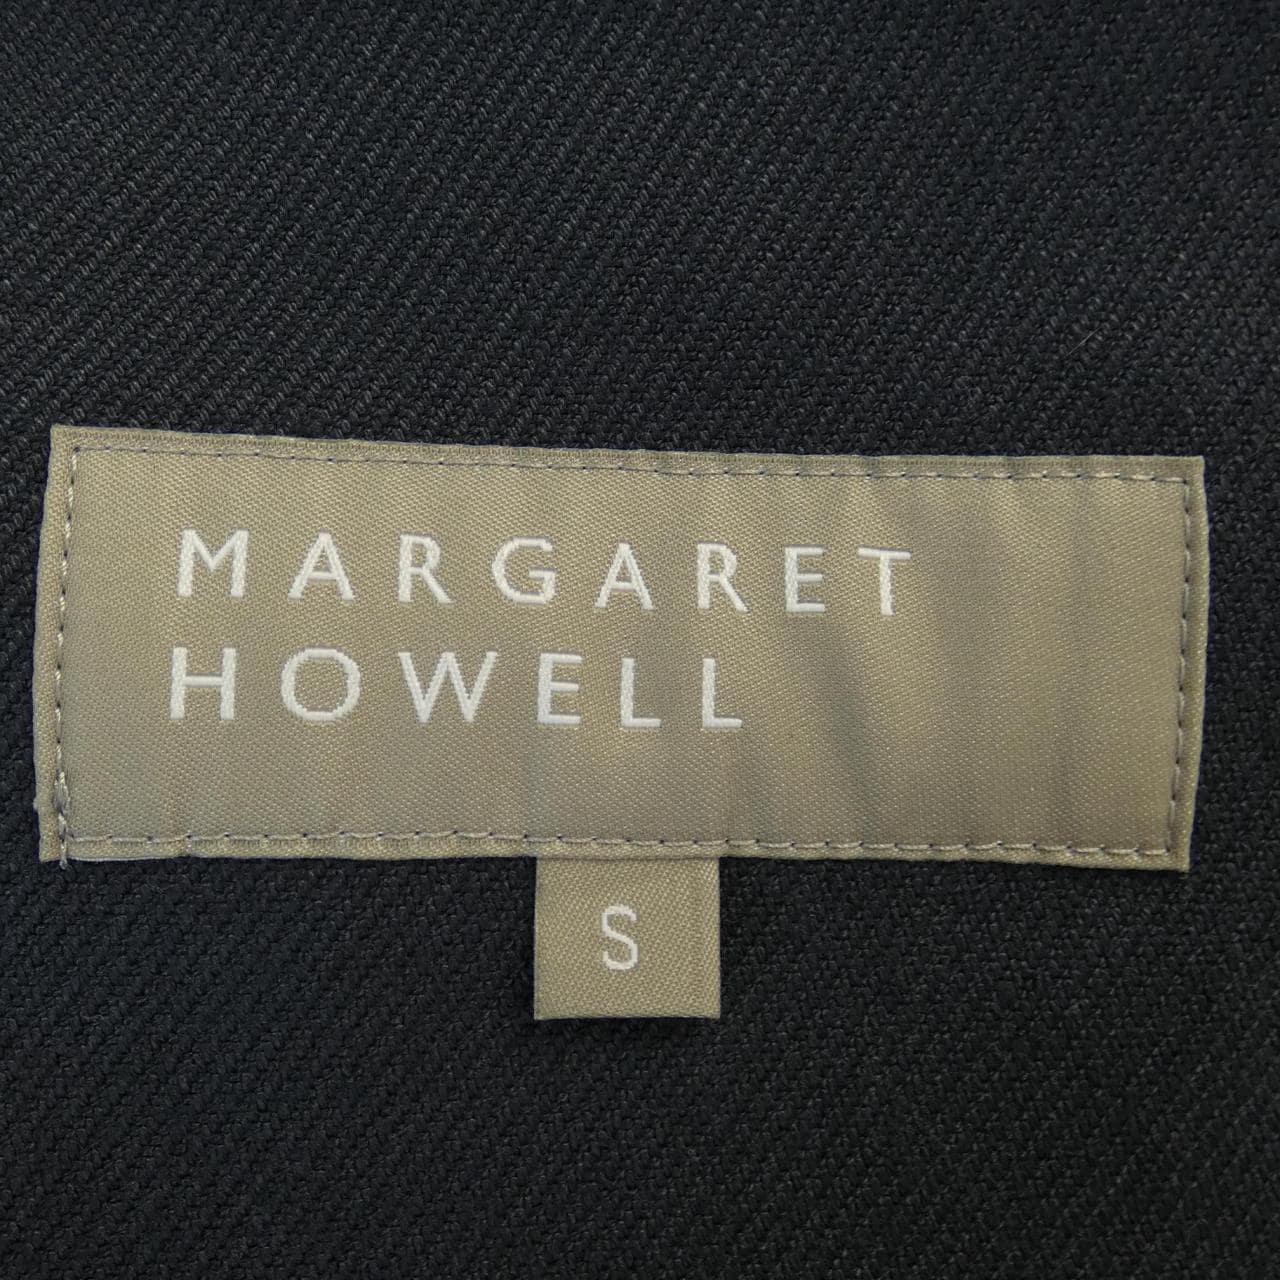 瑪格麗特豪威爾Margaret Howell外套